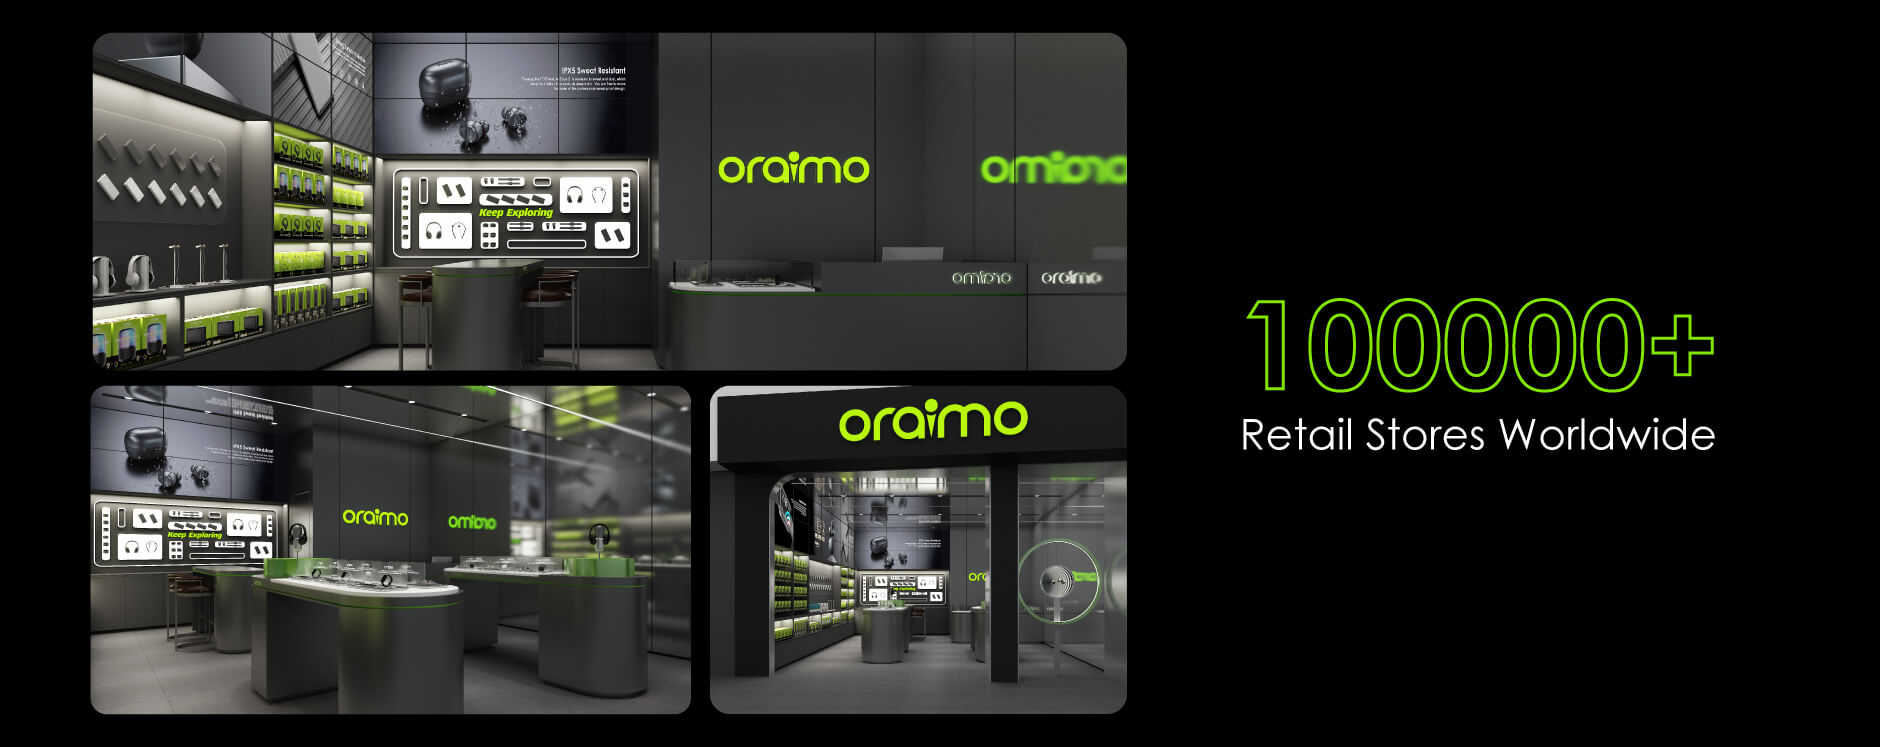 oraimo owns 100000+retailer stores worldwide